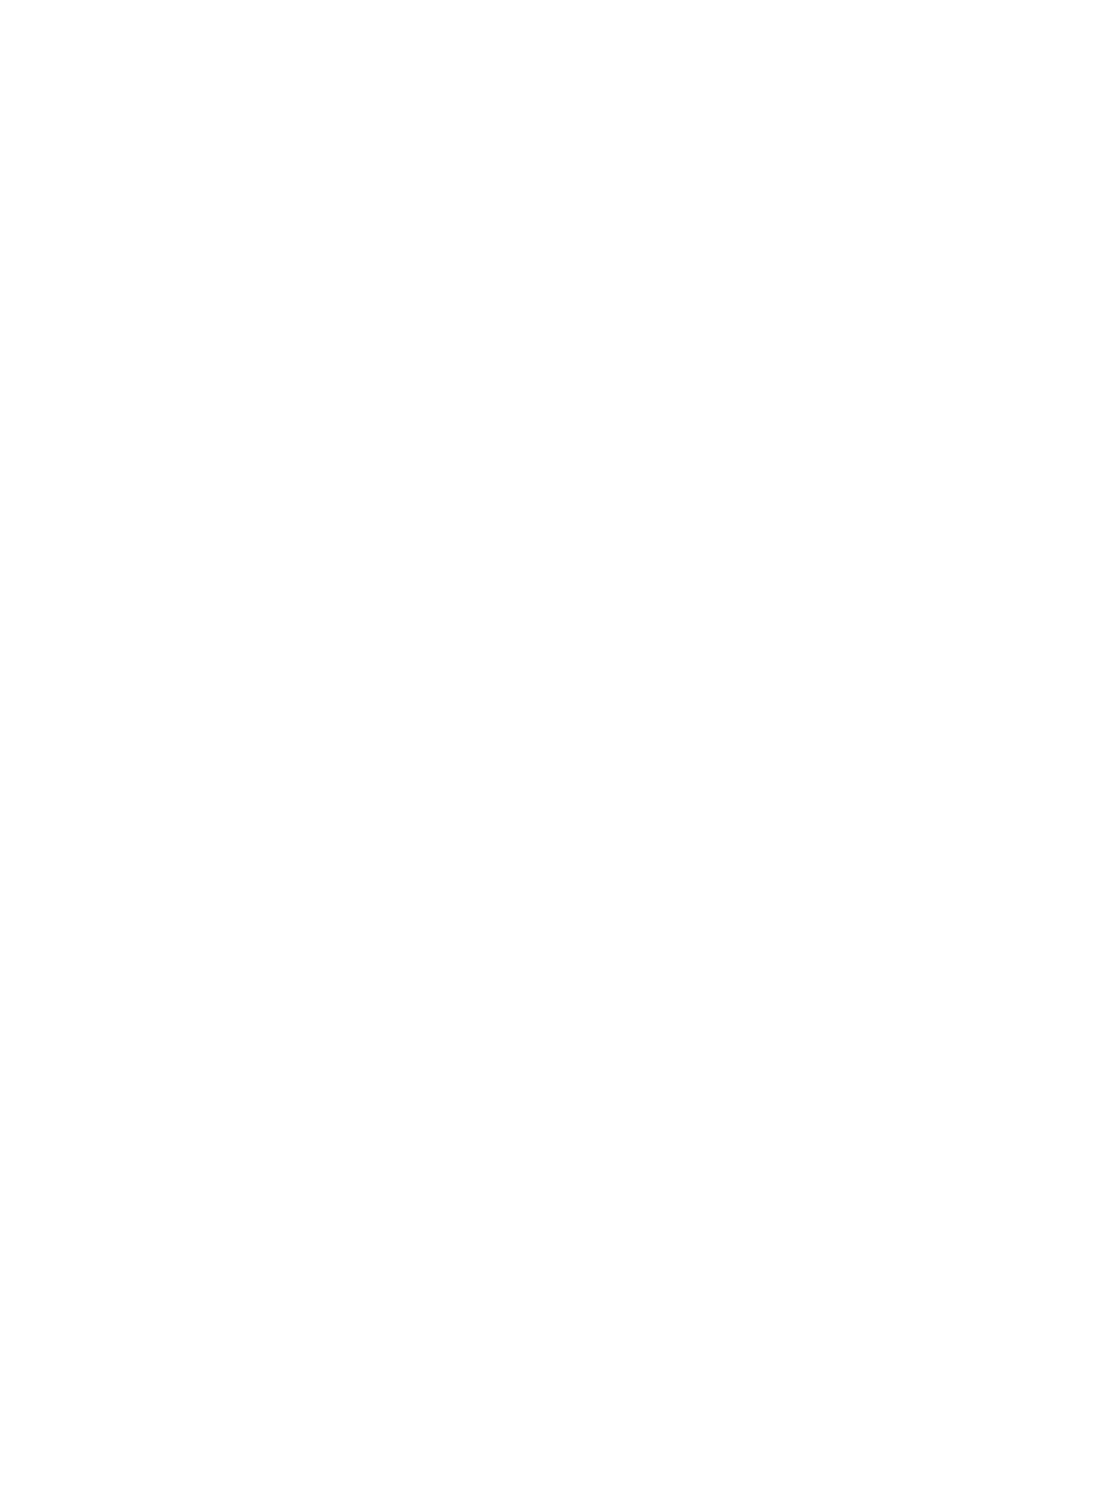 Asahi Group logo for dark backgrounds (transparent PNG)